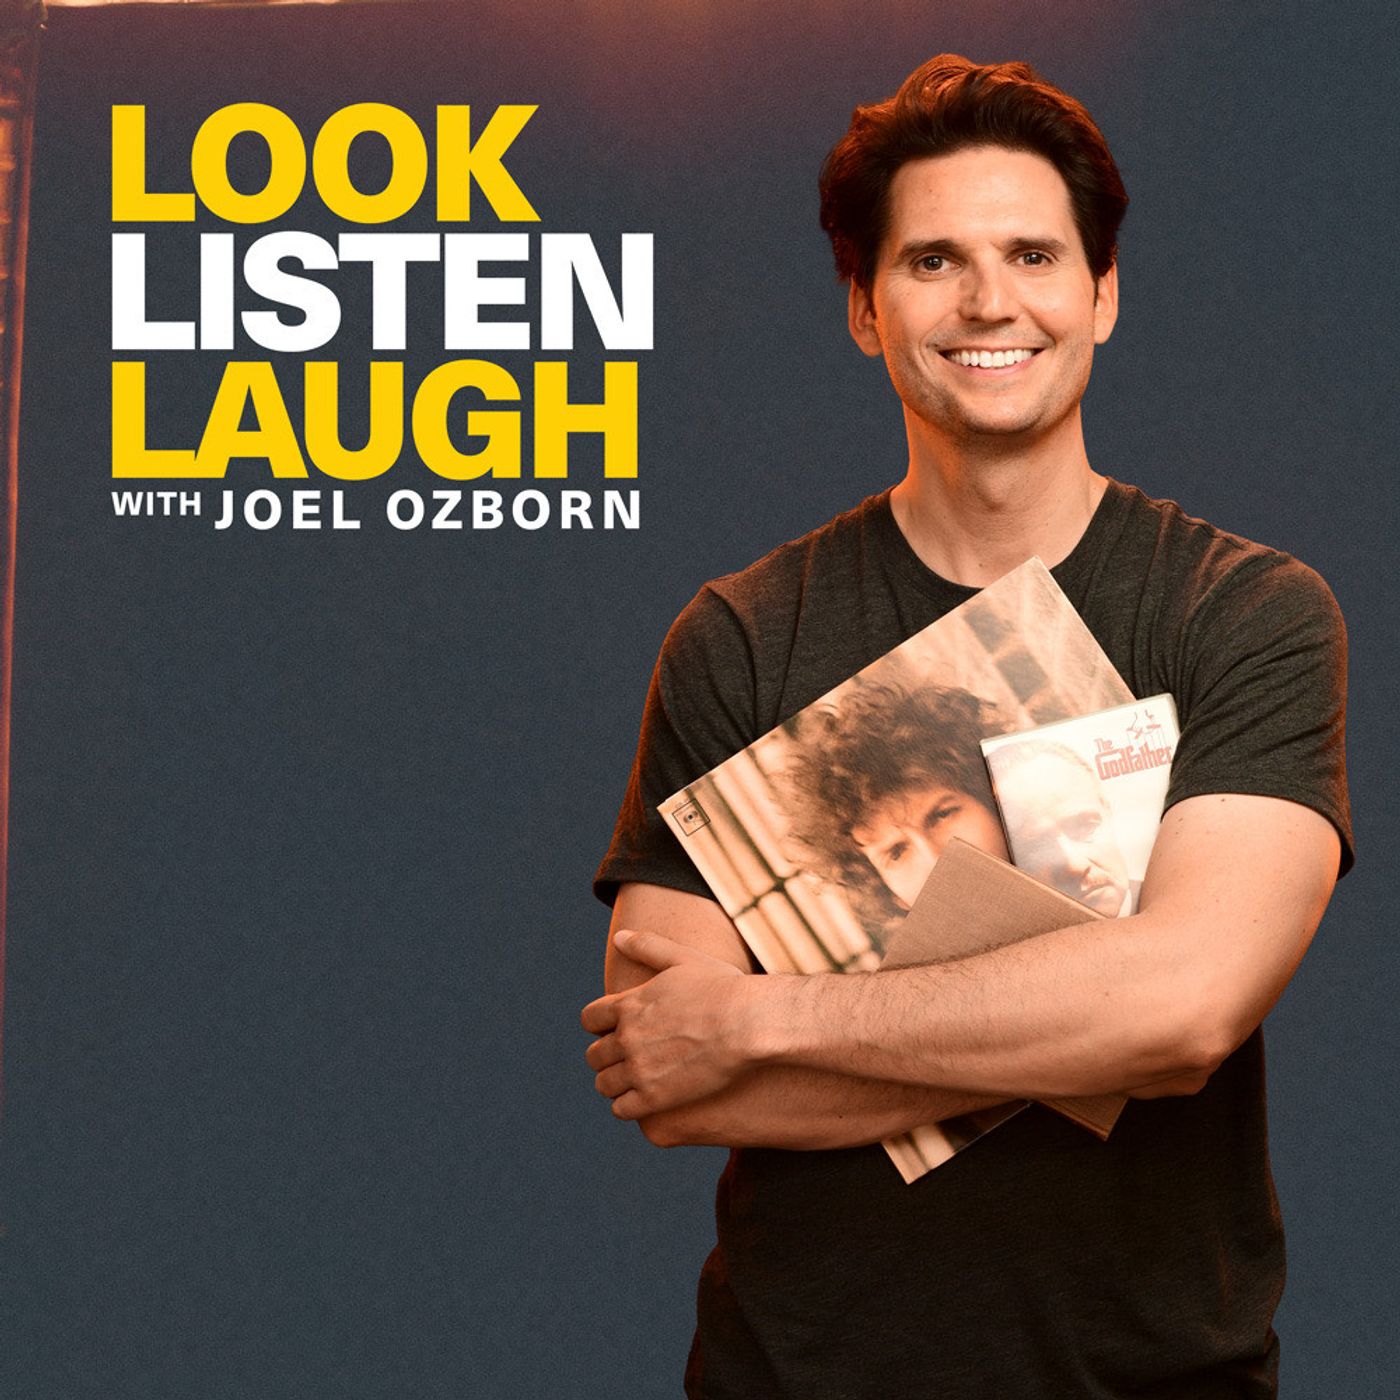 Look Listen Laugh with Joel Ozborn